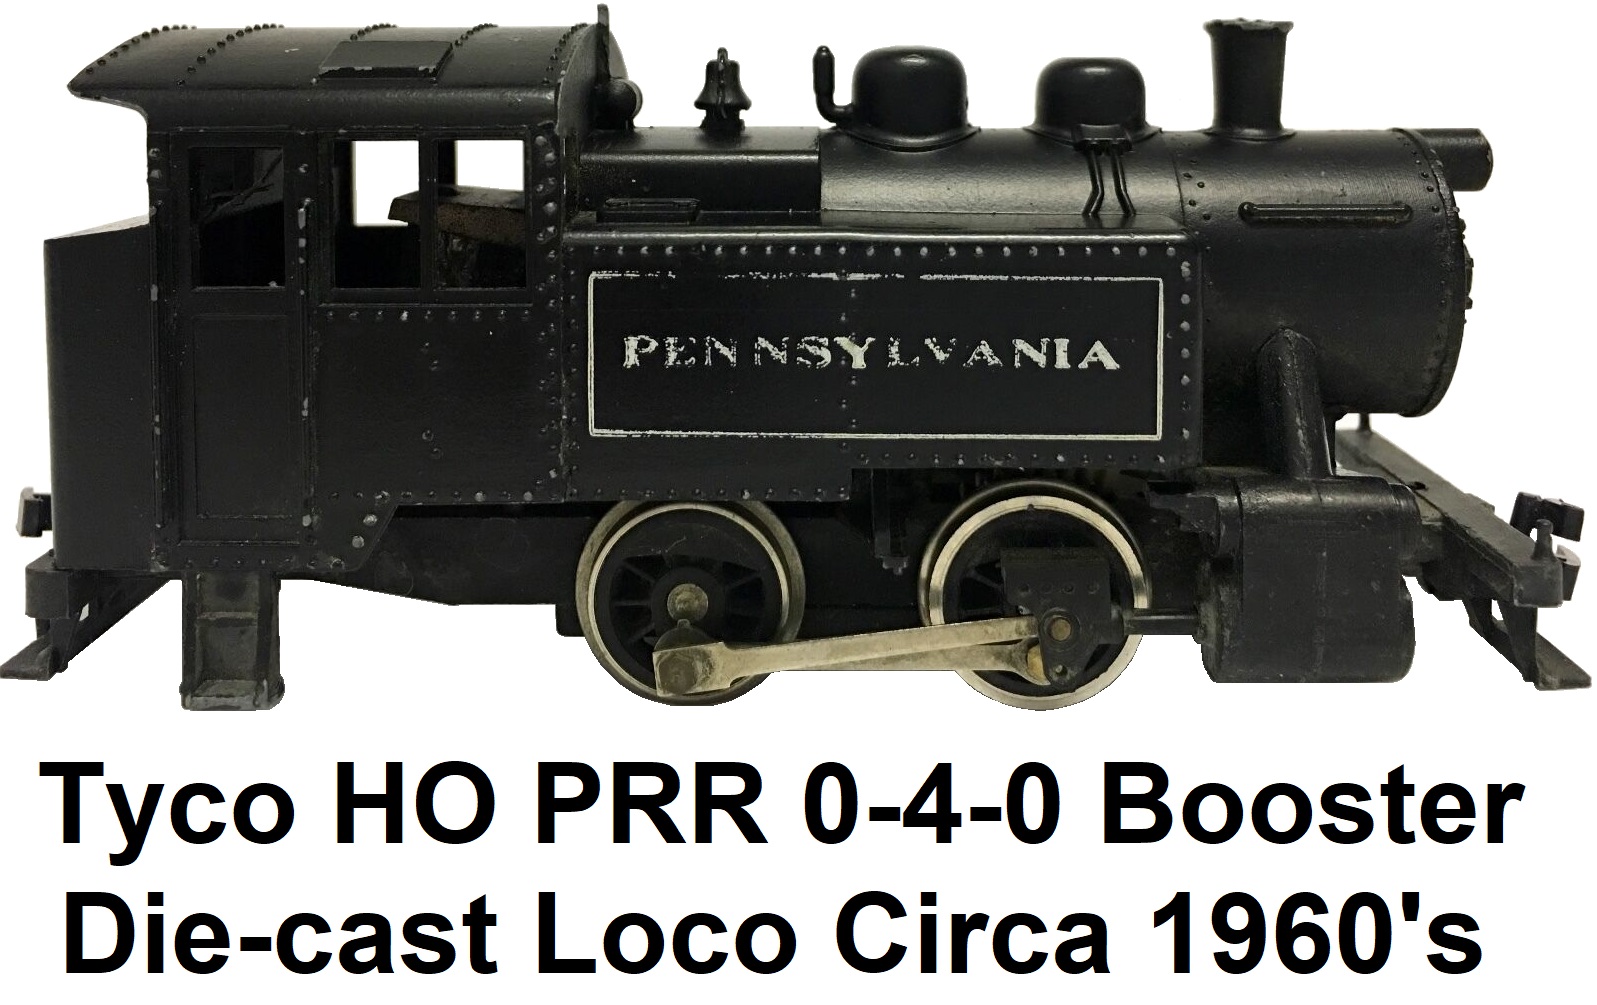 Tyco HO Pennsylvania RR 0-4-0 Booster 3975 die-cast Locomotive red box era circa 1960's #T213-A